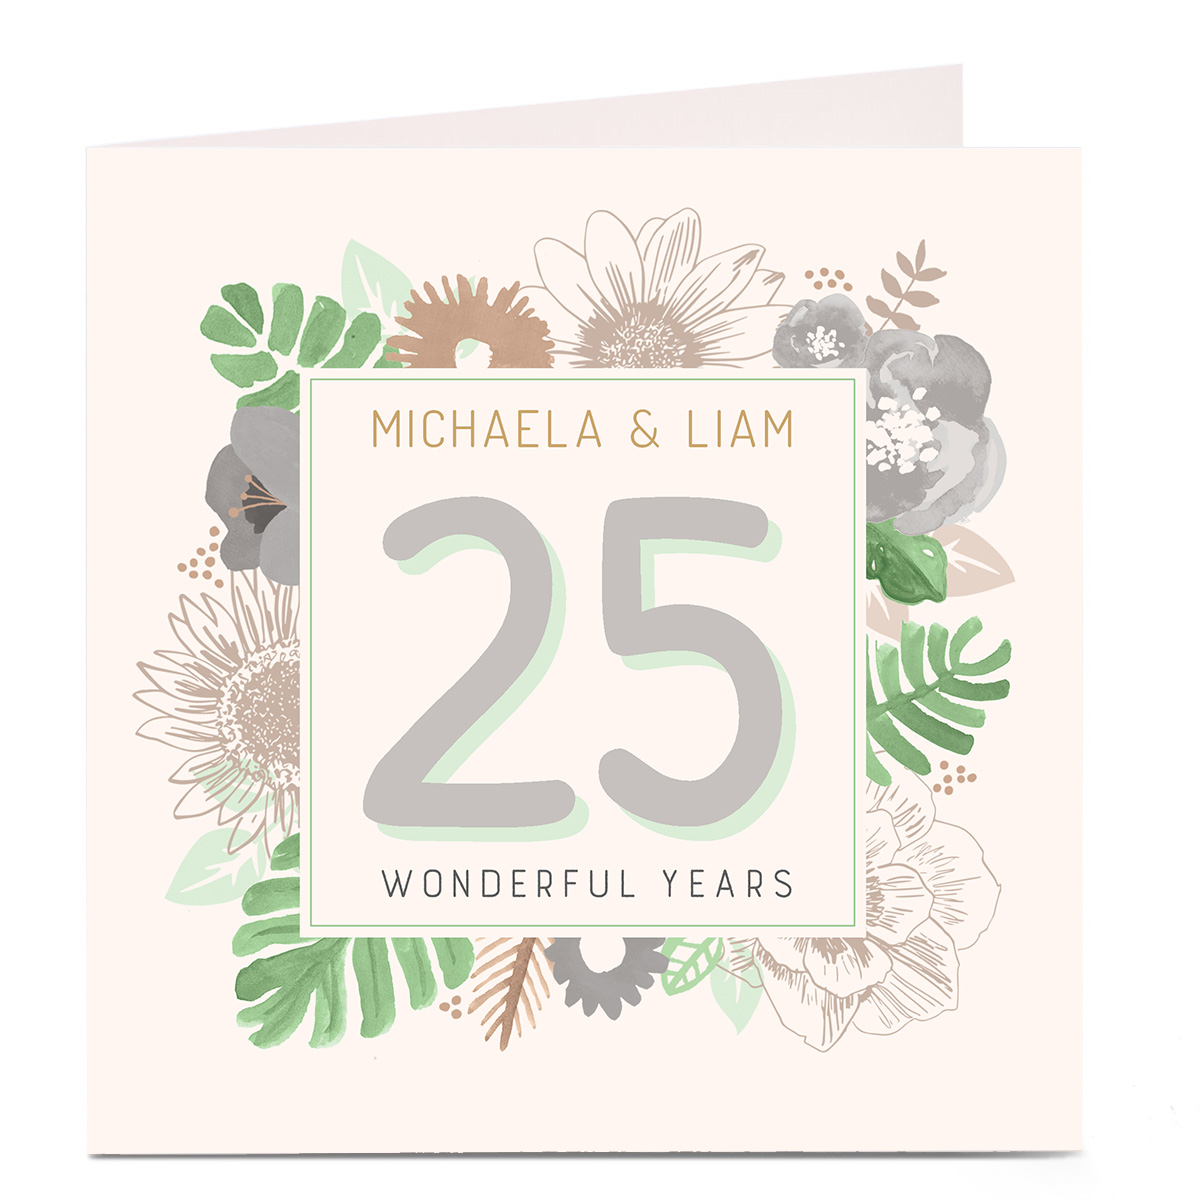 Personalised Anniversary Card - Flowers & Green Leaves